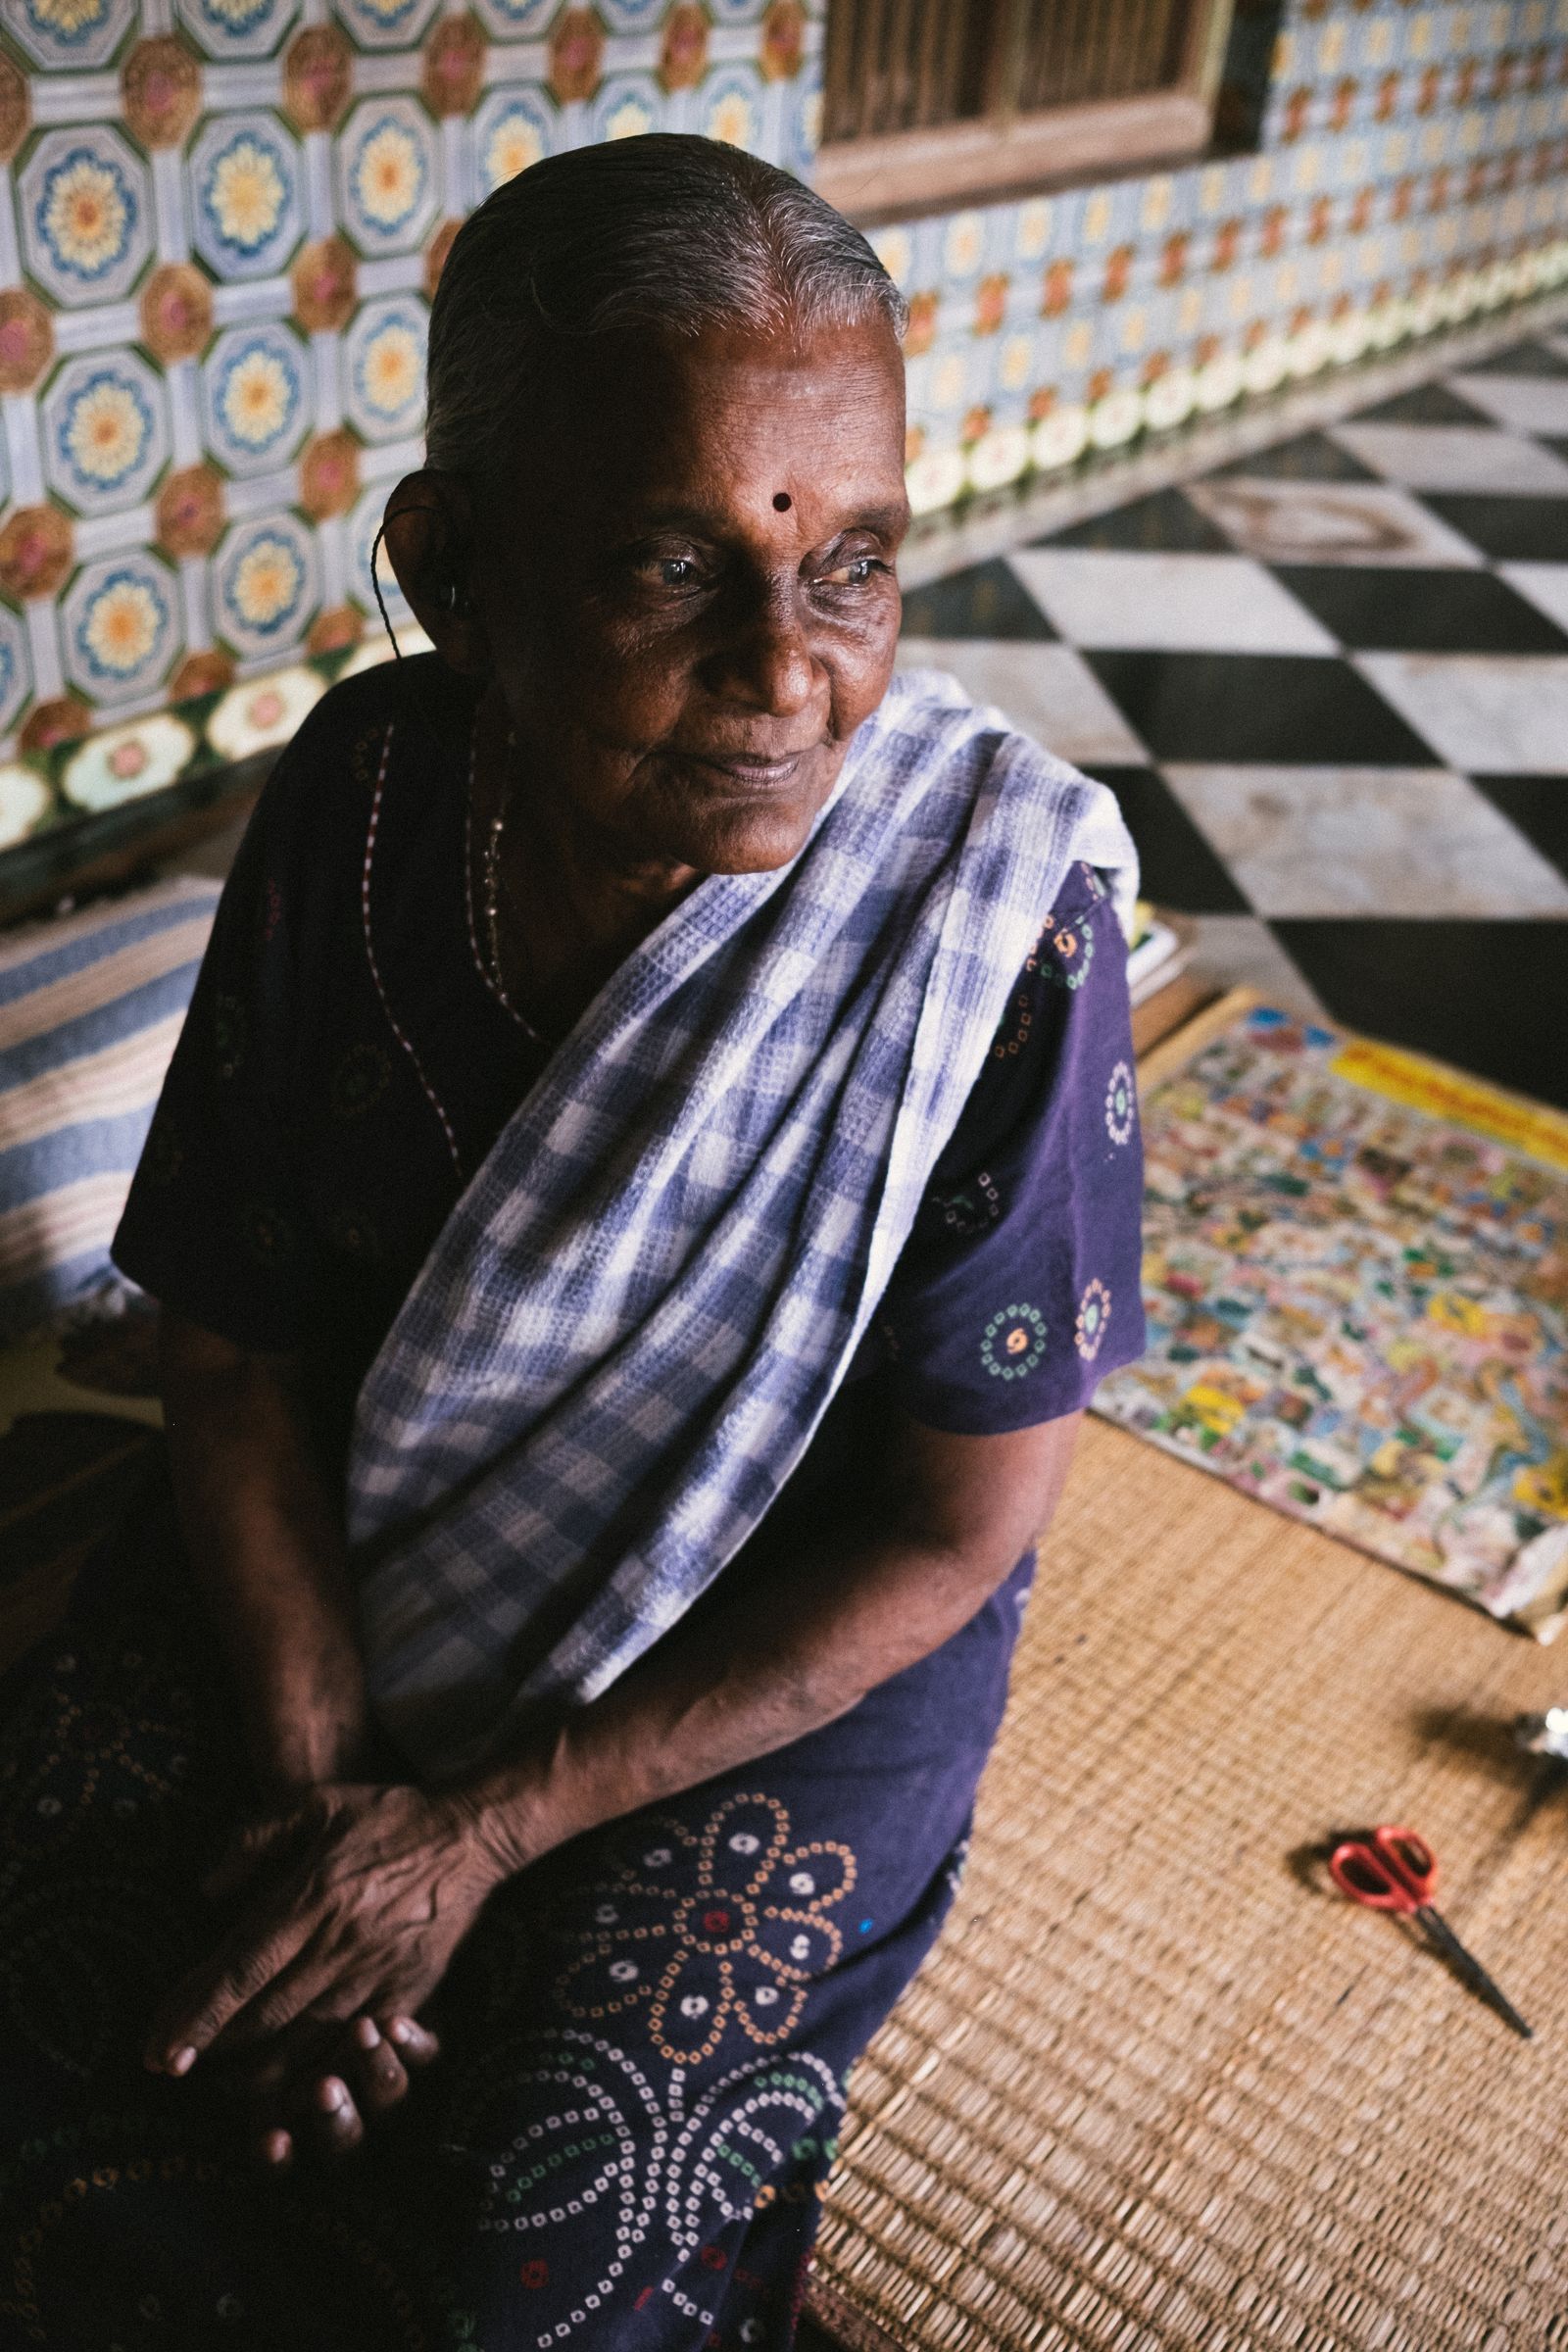 © Raja singaravelu - Image from the The World Of Rukmani Amma photography project